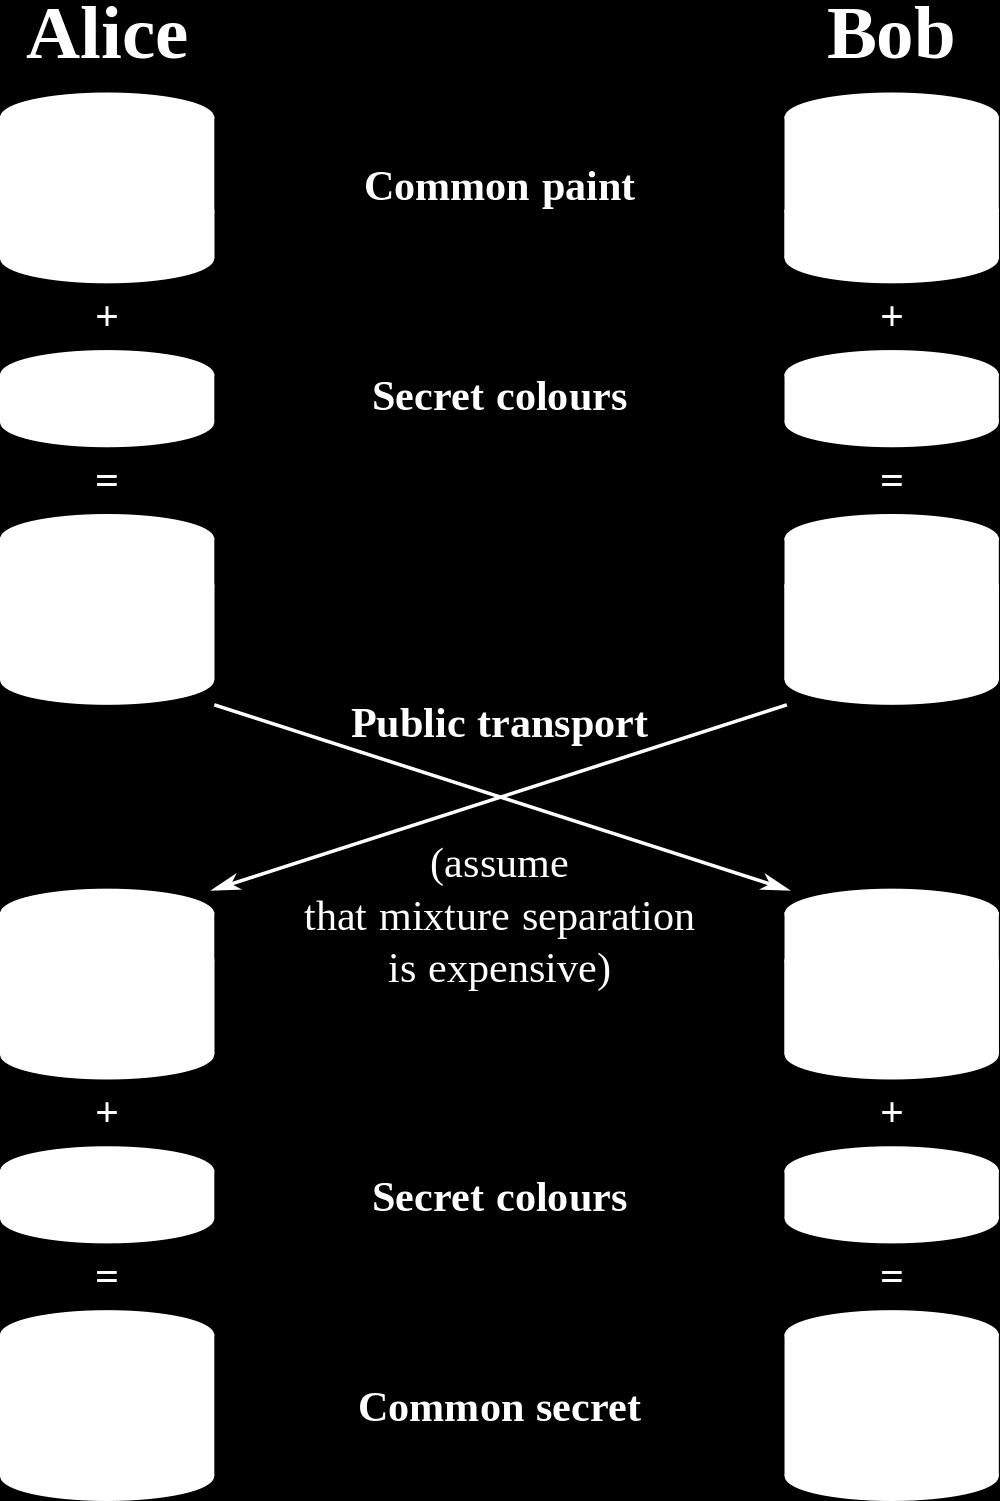 Diffie-Hellman Paint Analogy (courtesy of Wikipedia) common paint: g, p secret colors: a, b